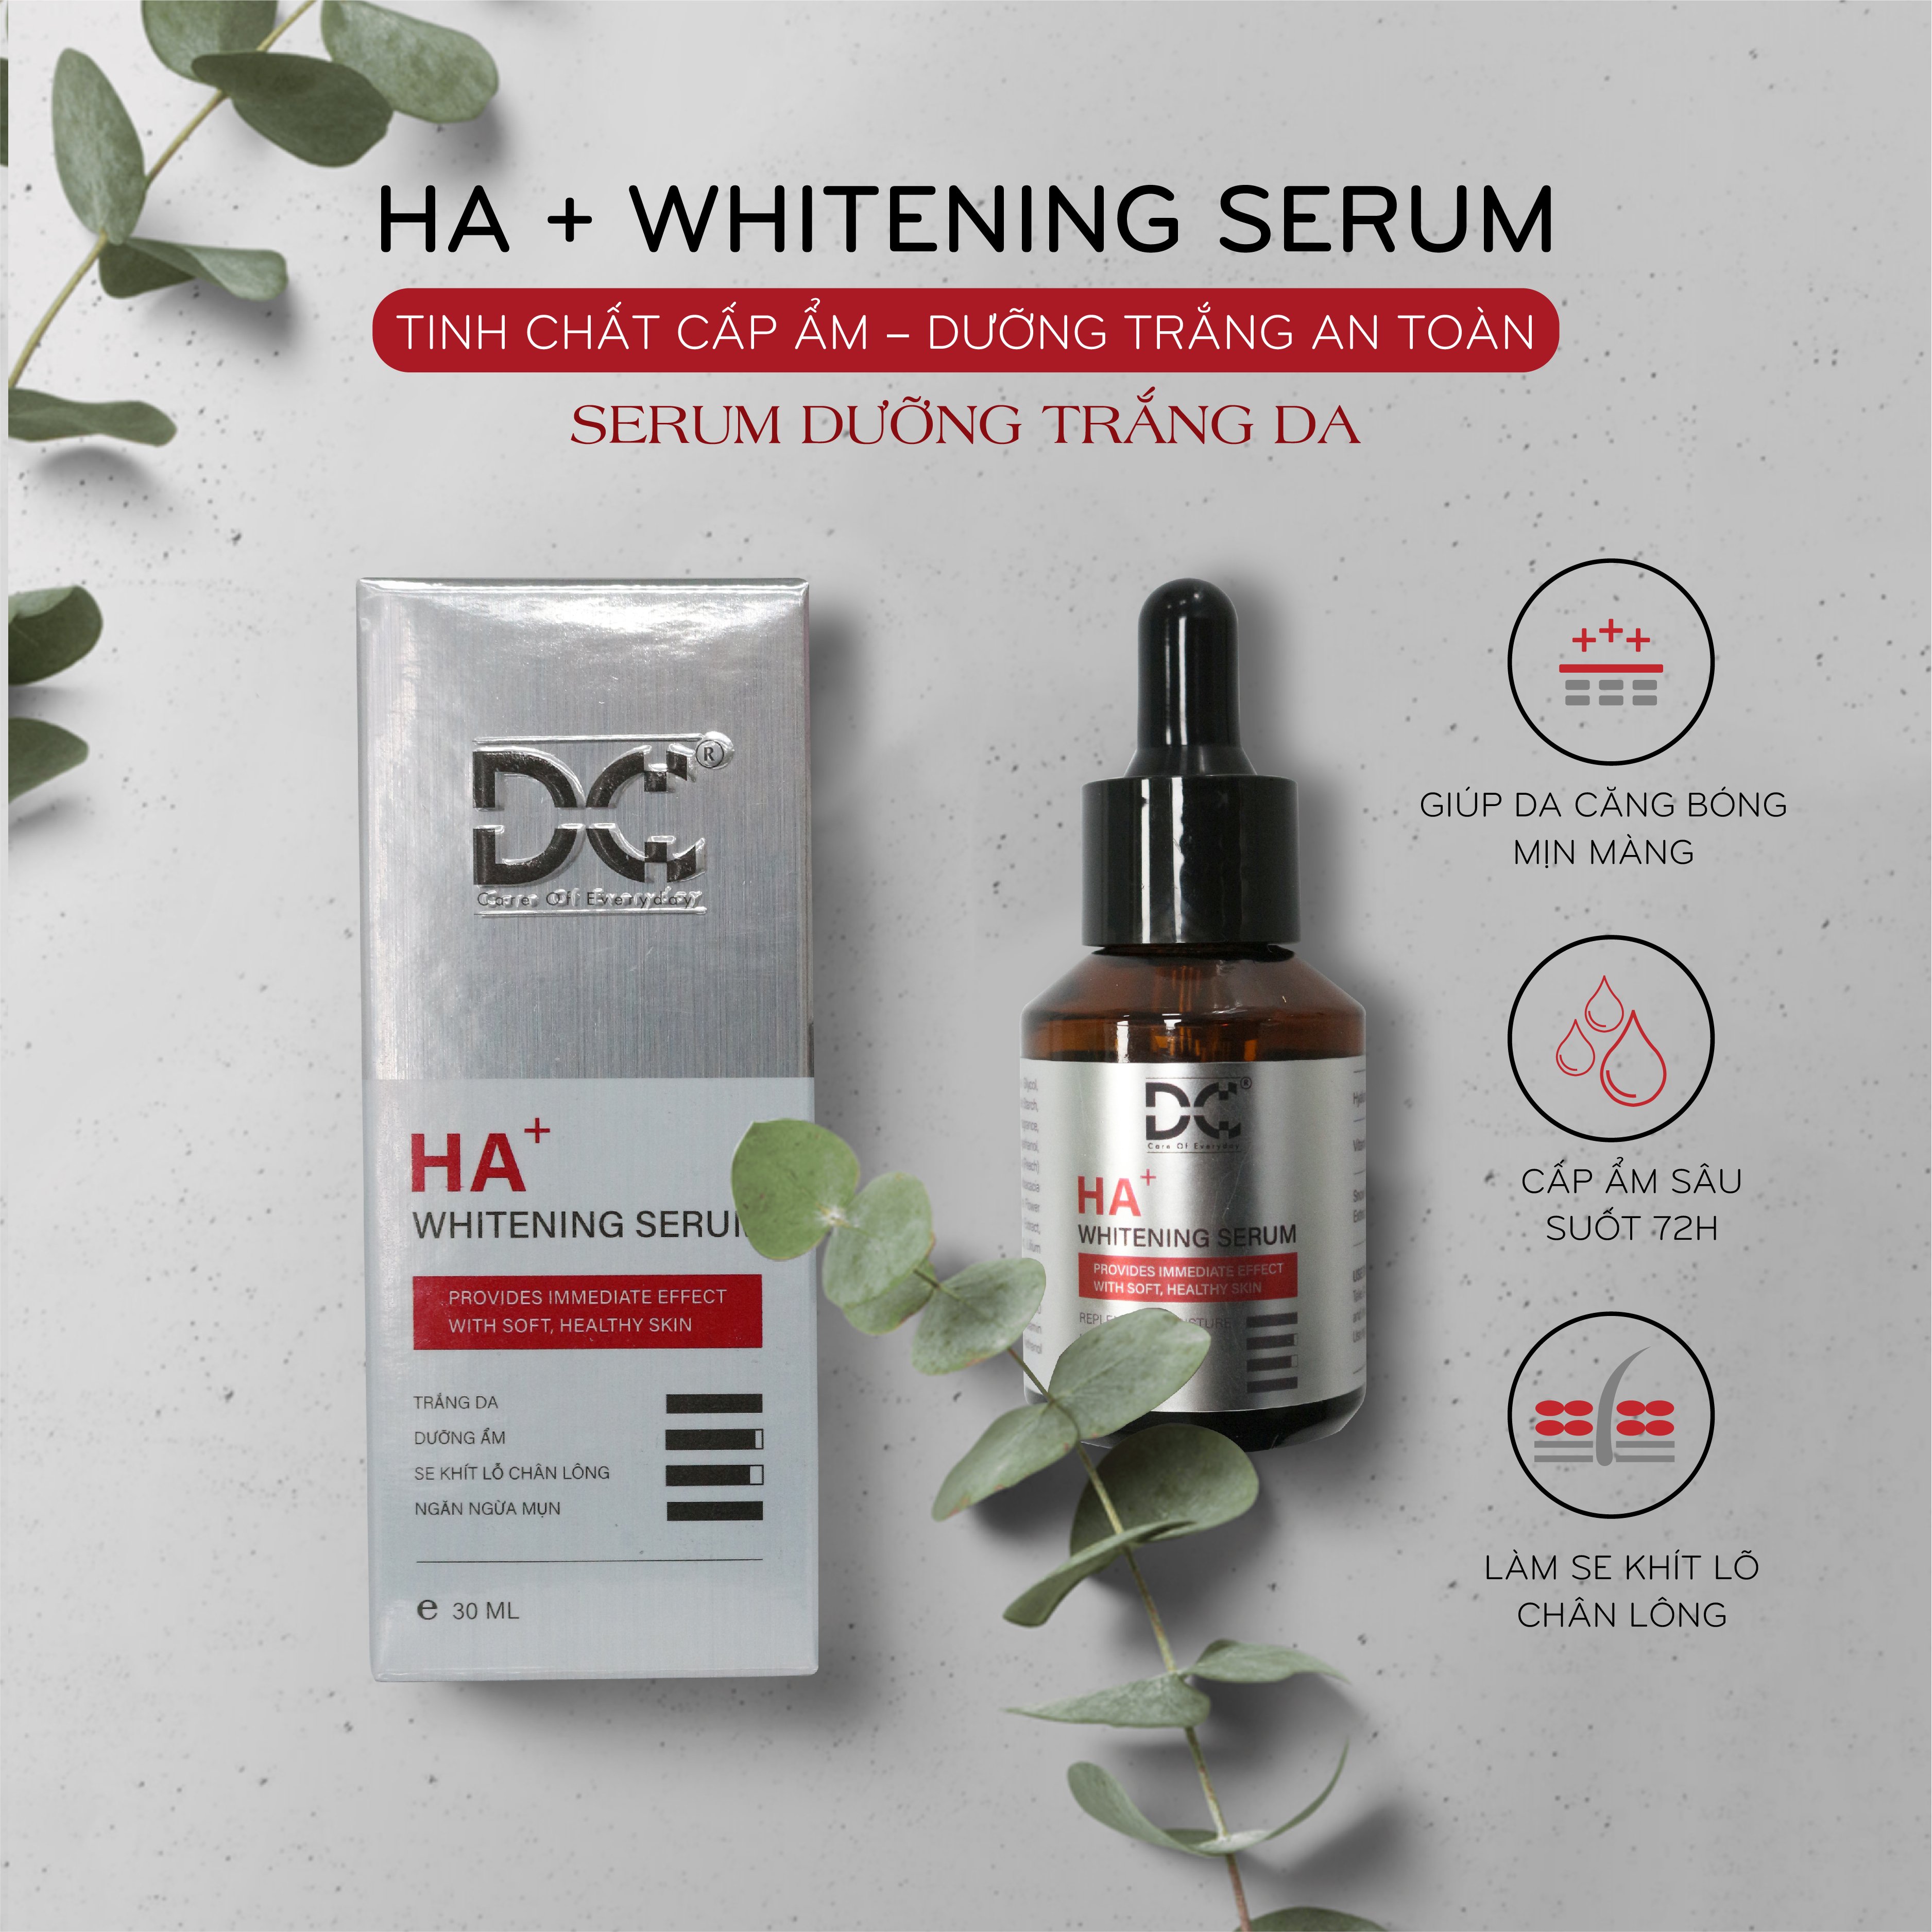 HA + Whitening Serum DC - Serum Dưỡng Trắng Da 50gr